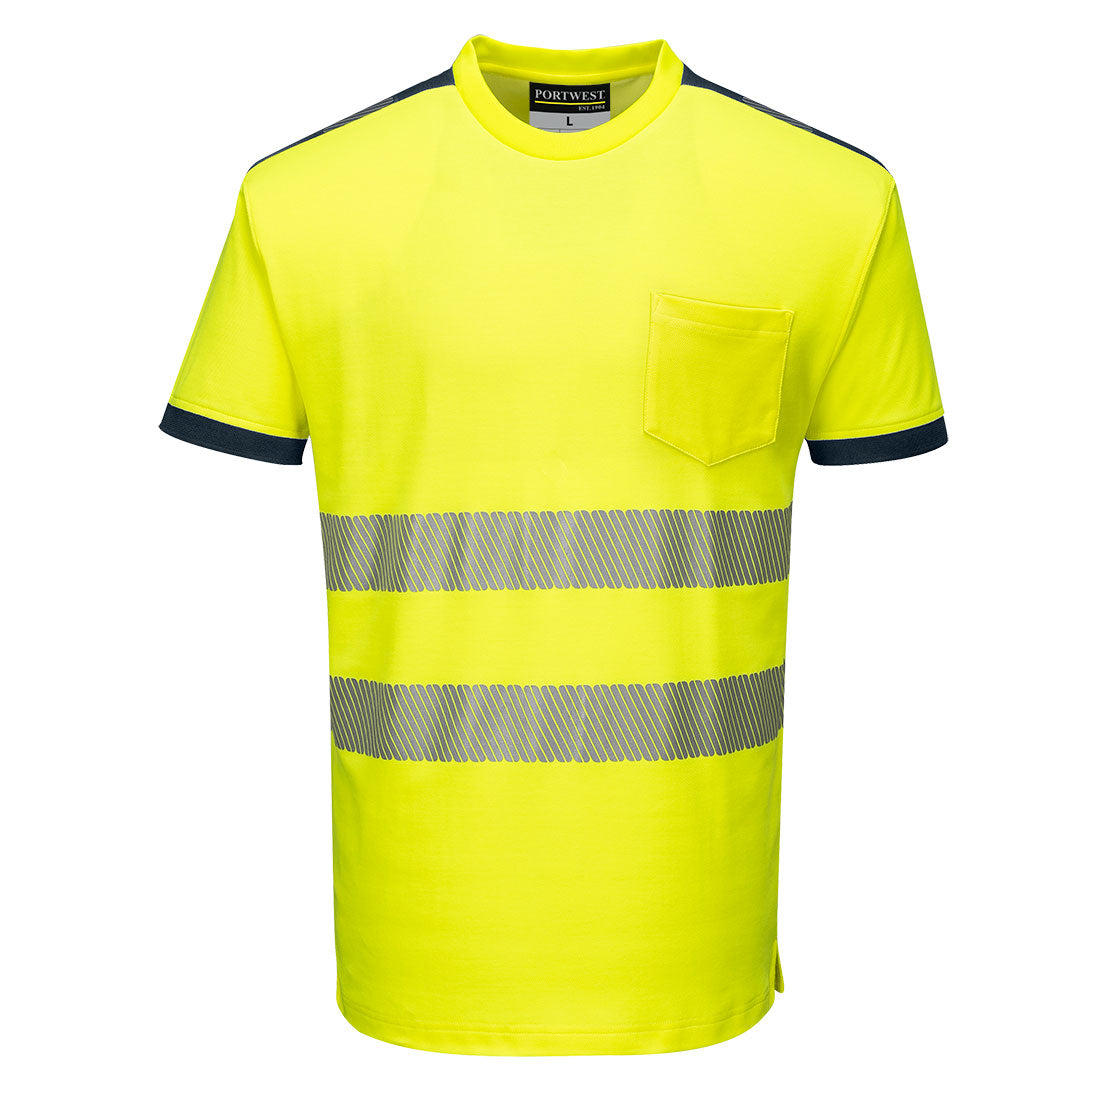 Portwest T181 - Yellow/Navy Sz S PW3 Hi-Vis Short Sleeved T-Shirt Viz Visibilty